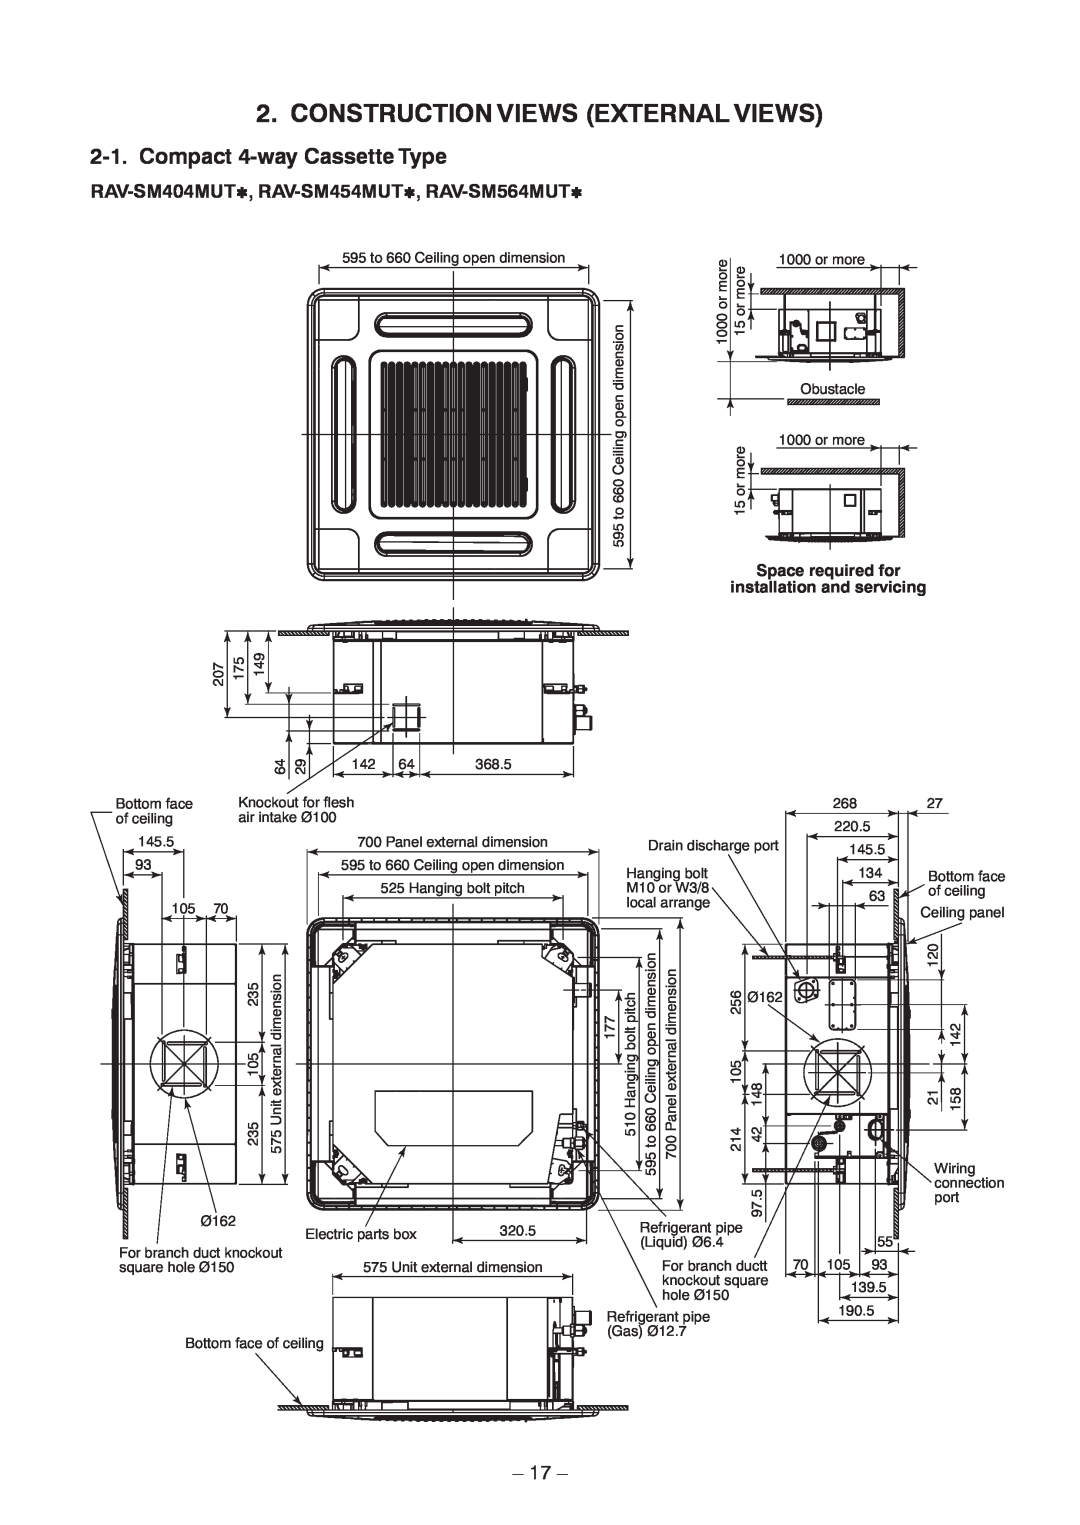 Toshiba RAV-SM1104BT-E, RAV-SM454MUT-E, RAV-SM404MUT-TR Construction Views External Views, Compact 4-wayCassette Type, 17 